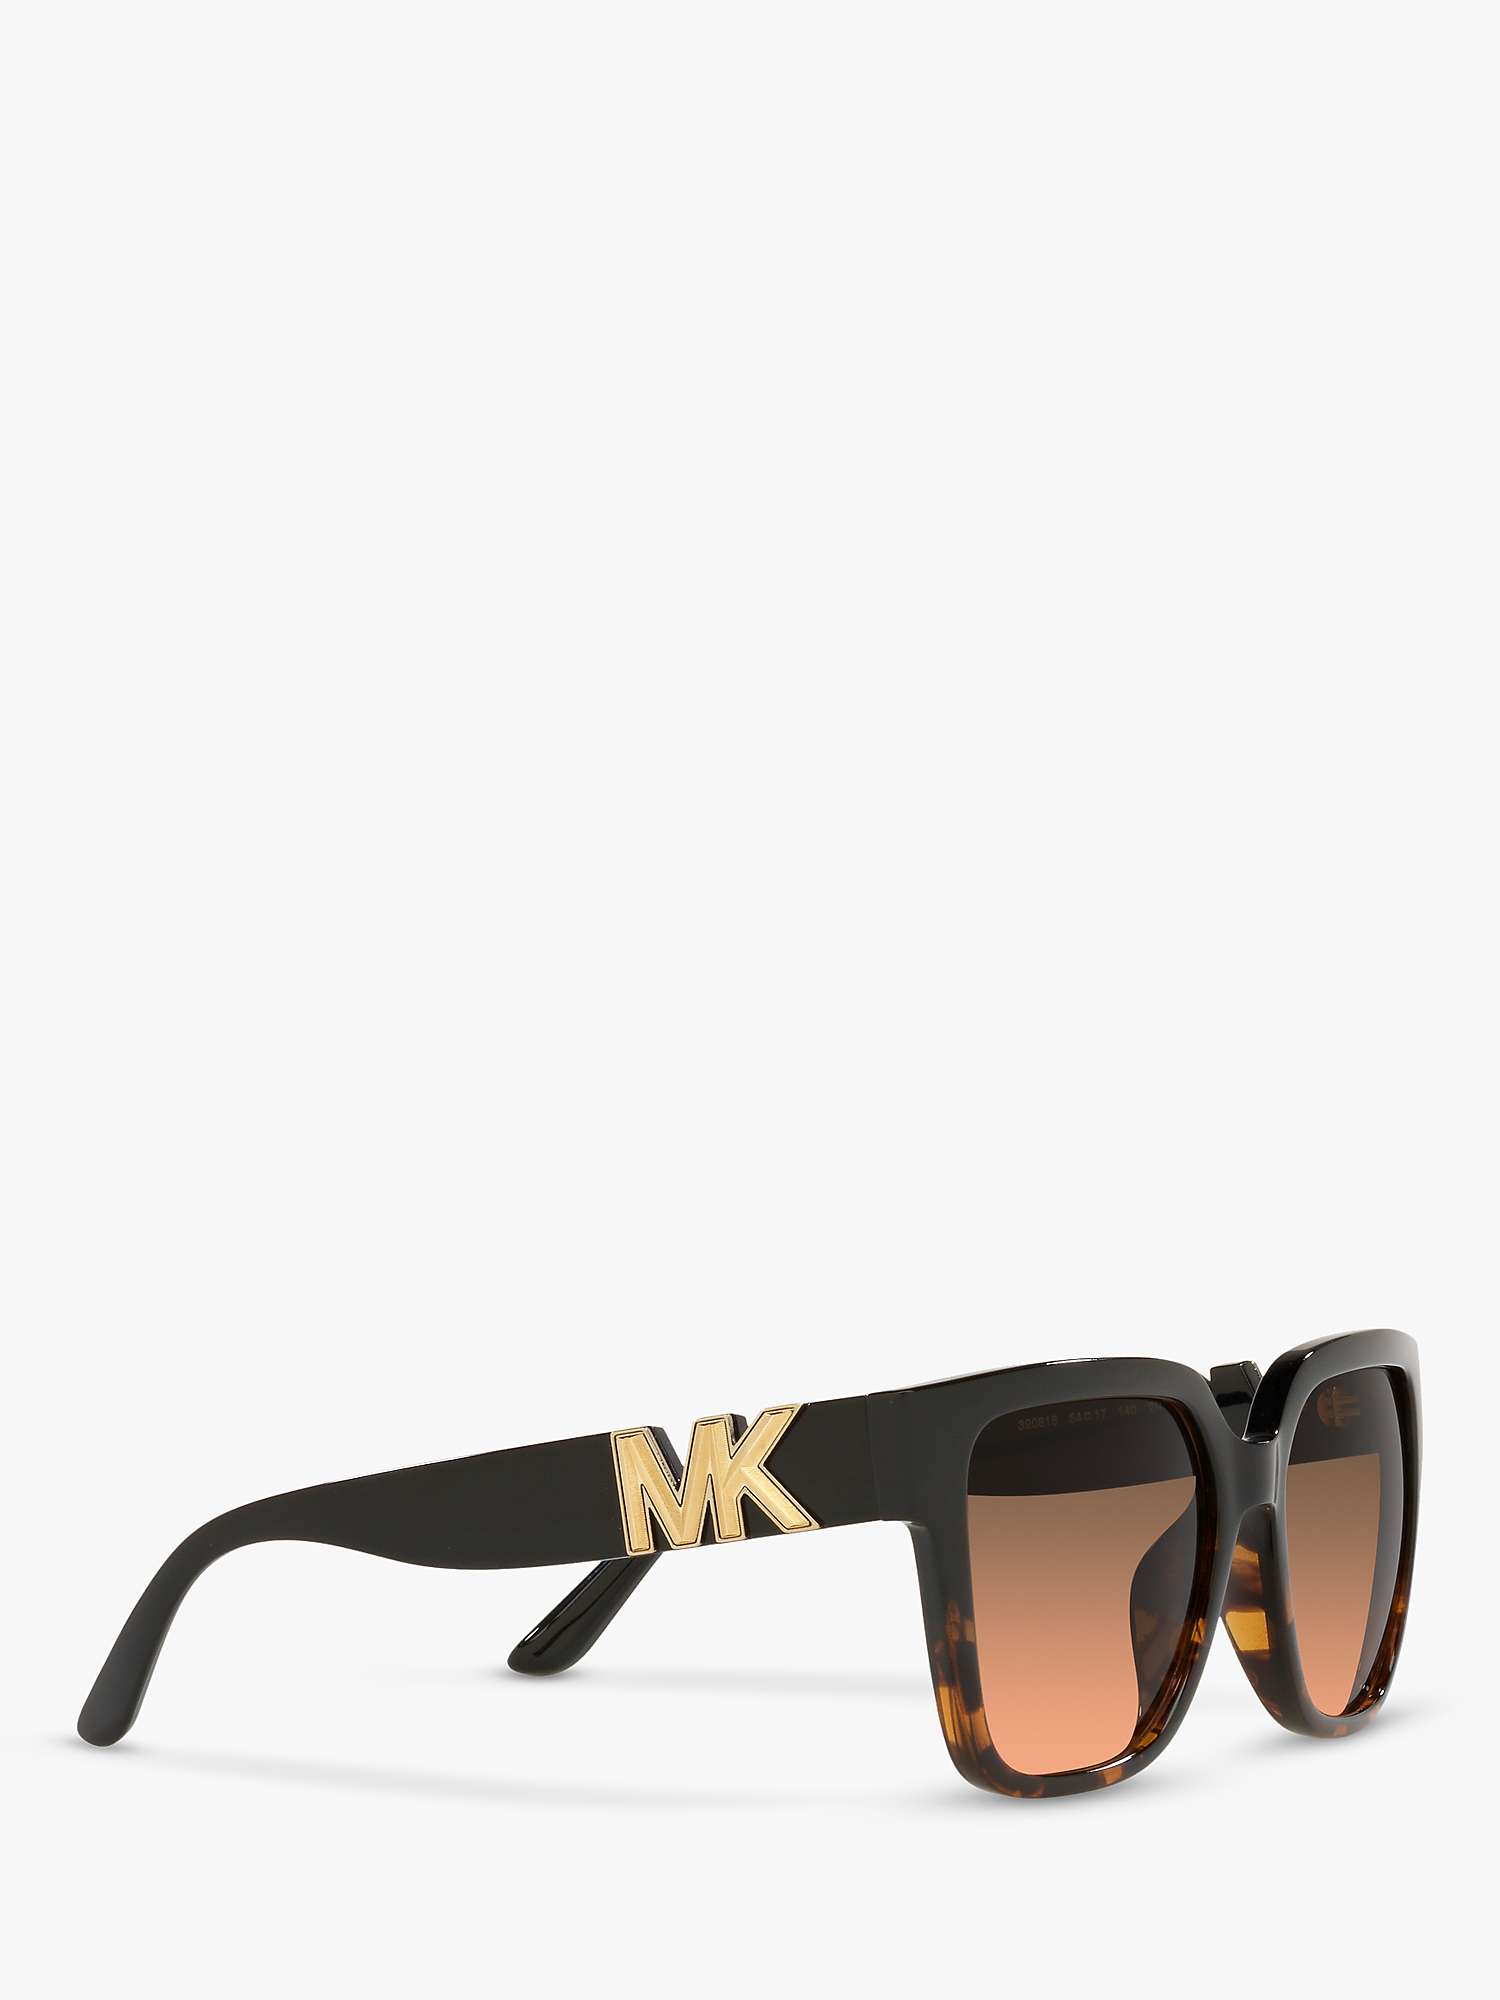 Buy Michael Kors MK2170U Women's Karlie Square Sunglasses Online at johnlewis.com